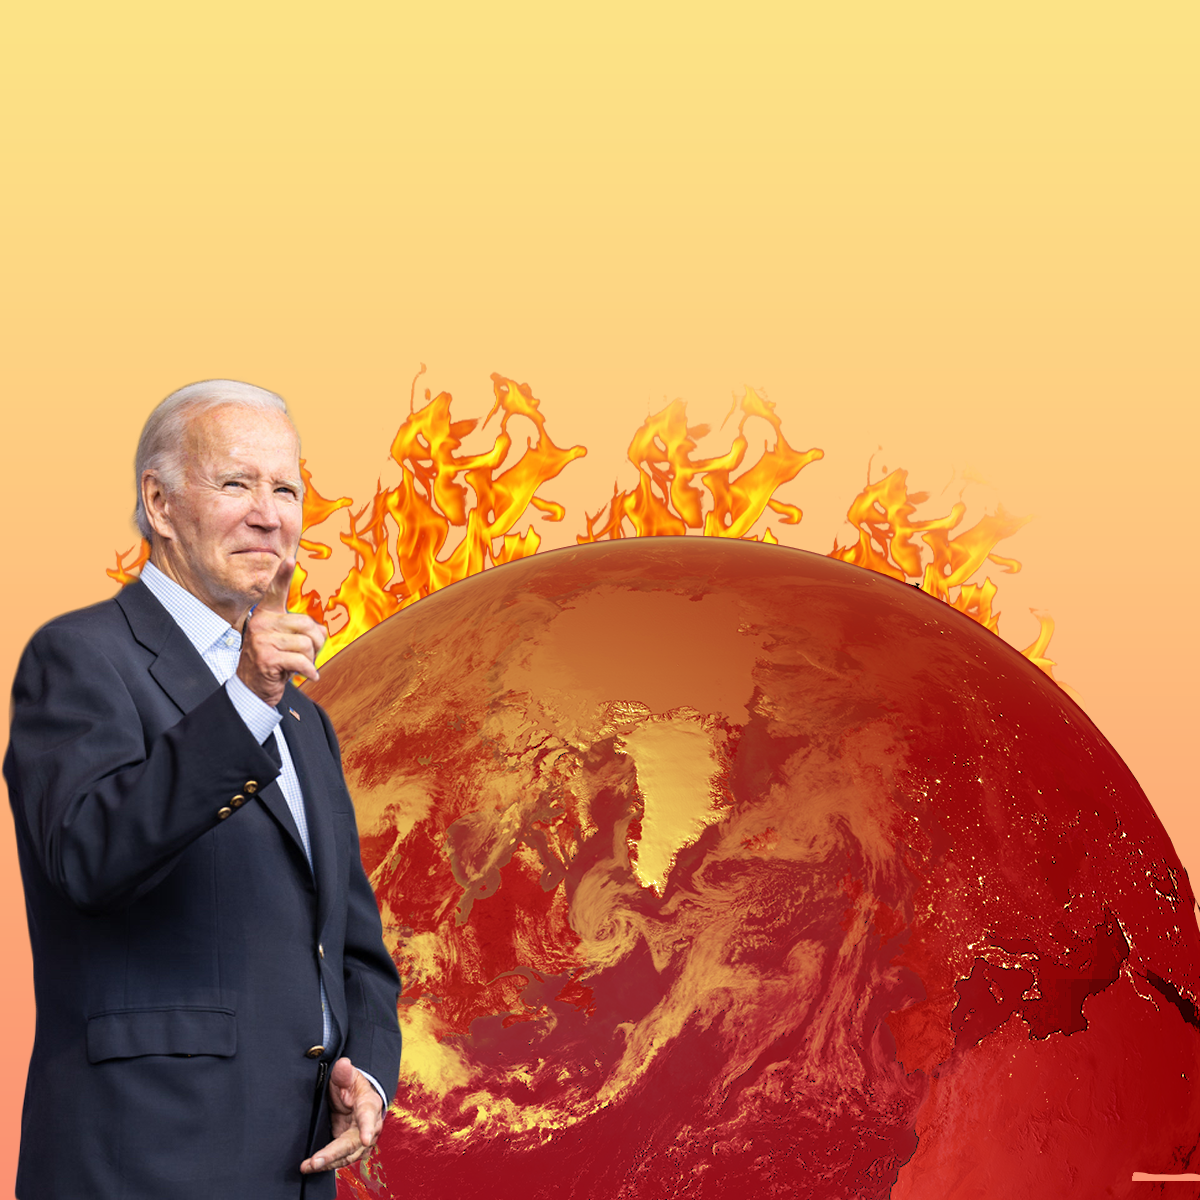 Biden Declare a Climate Emergency 